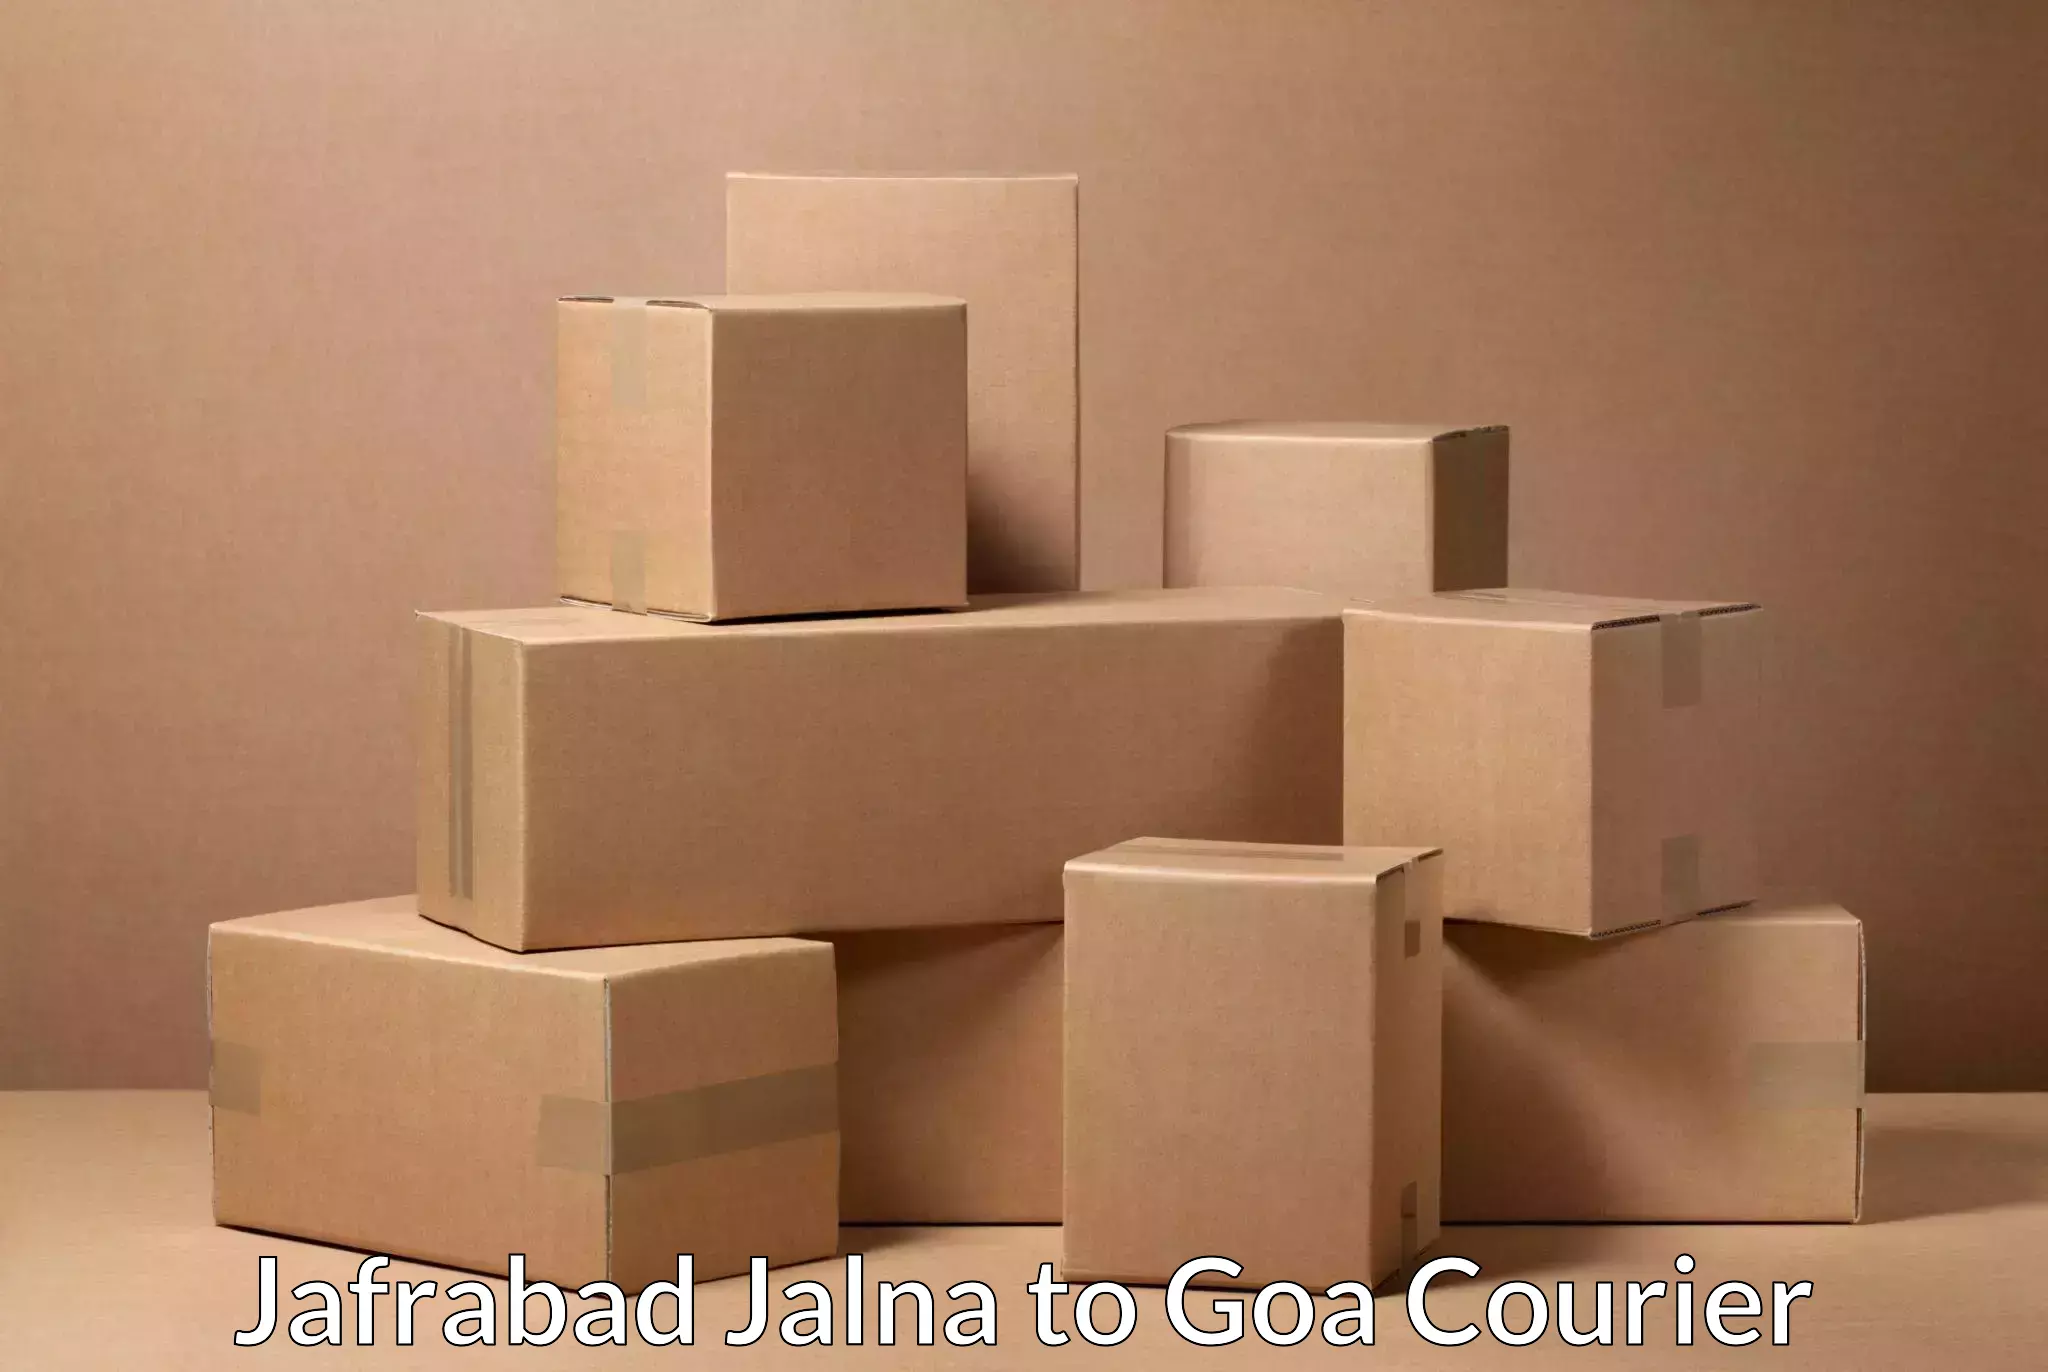 User-friendly delivery service Jafrabad Jalna to Panaji